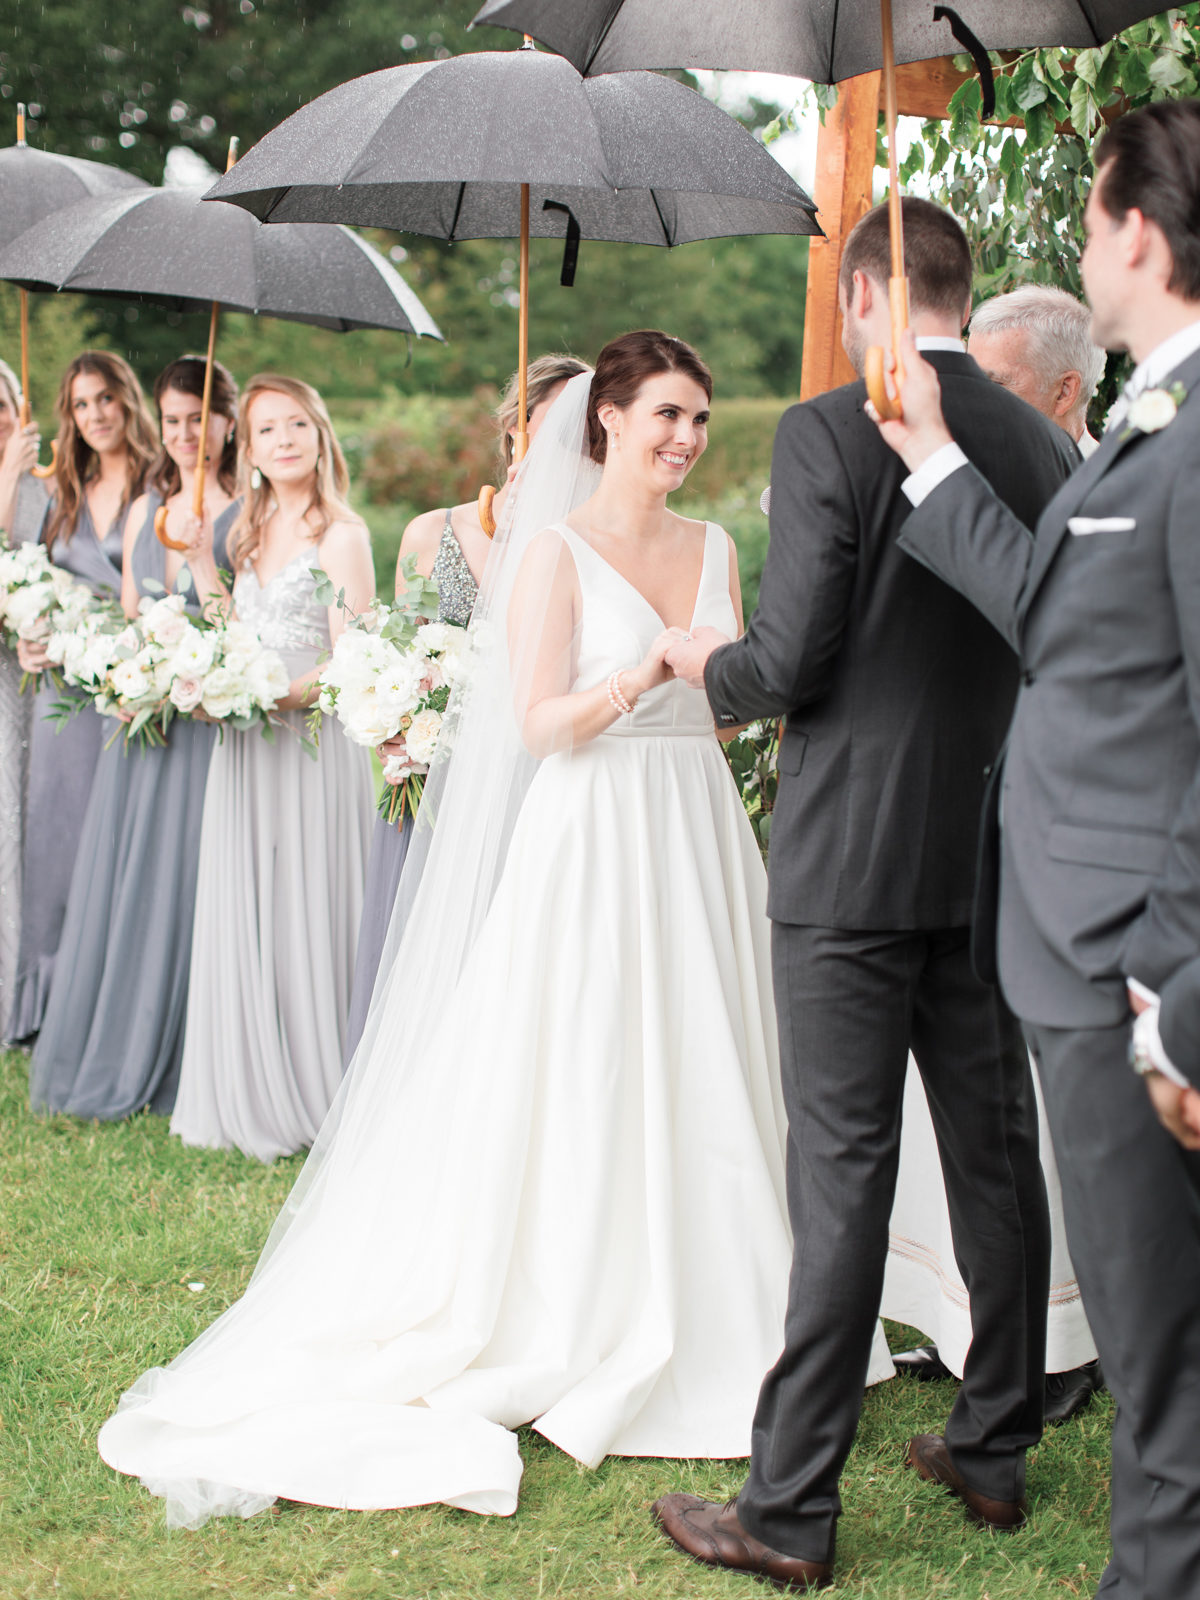 Mount Juliet Estate Wedding Photographer | Ireland Destination Wedding | Molly Carr Photography | Europe Film Photographer | Waterlily Weddings | Ceremony Arch | Garden Ceremony | Floral Arch